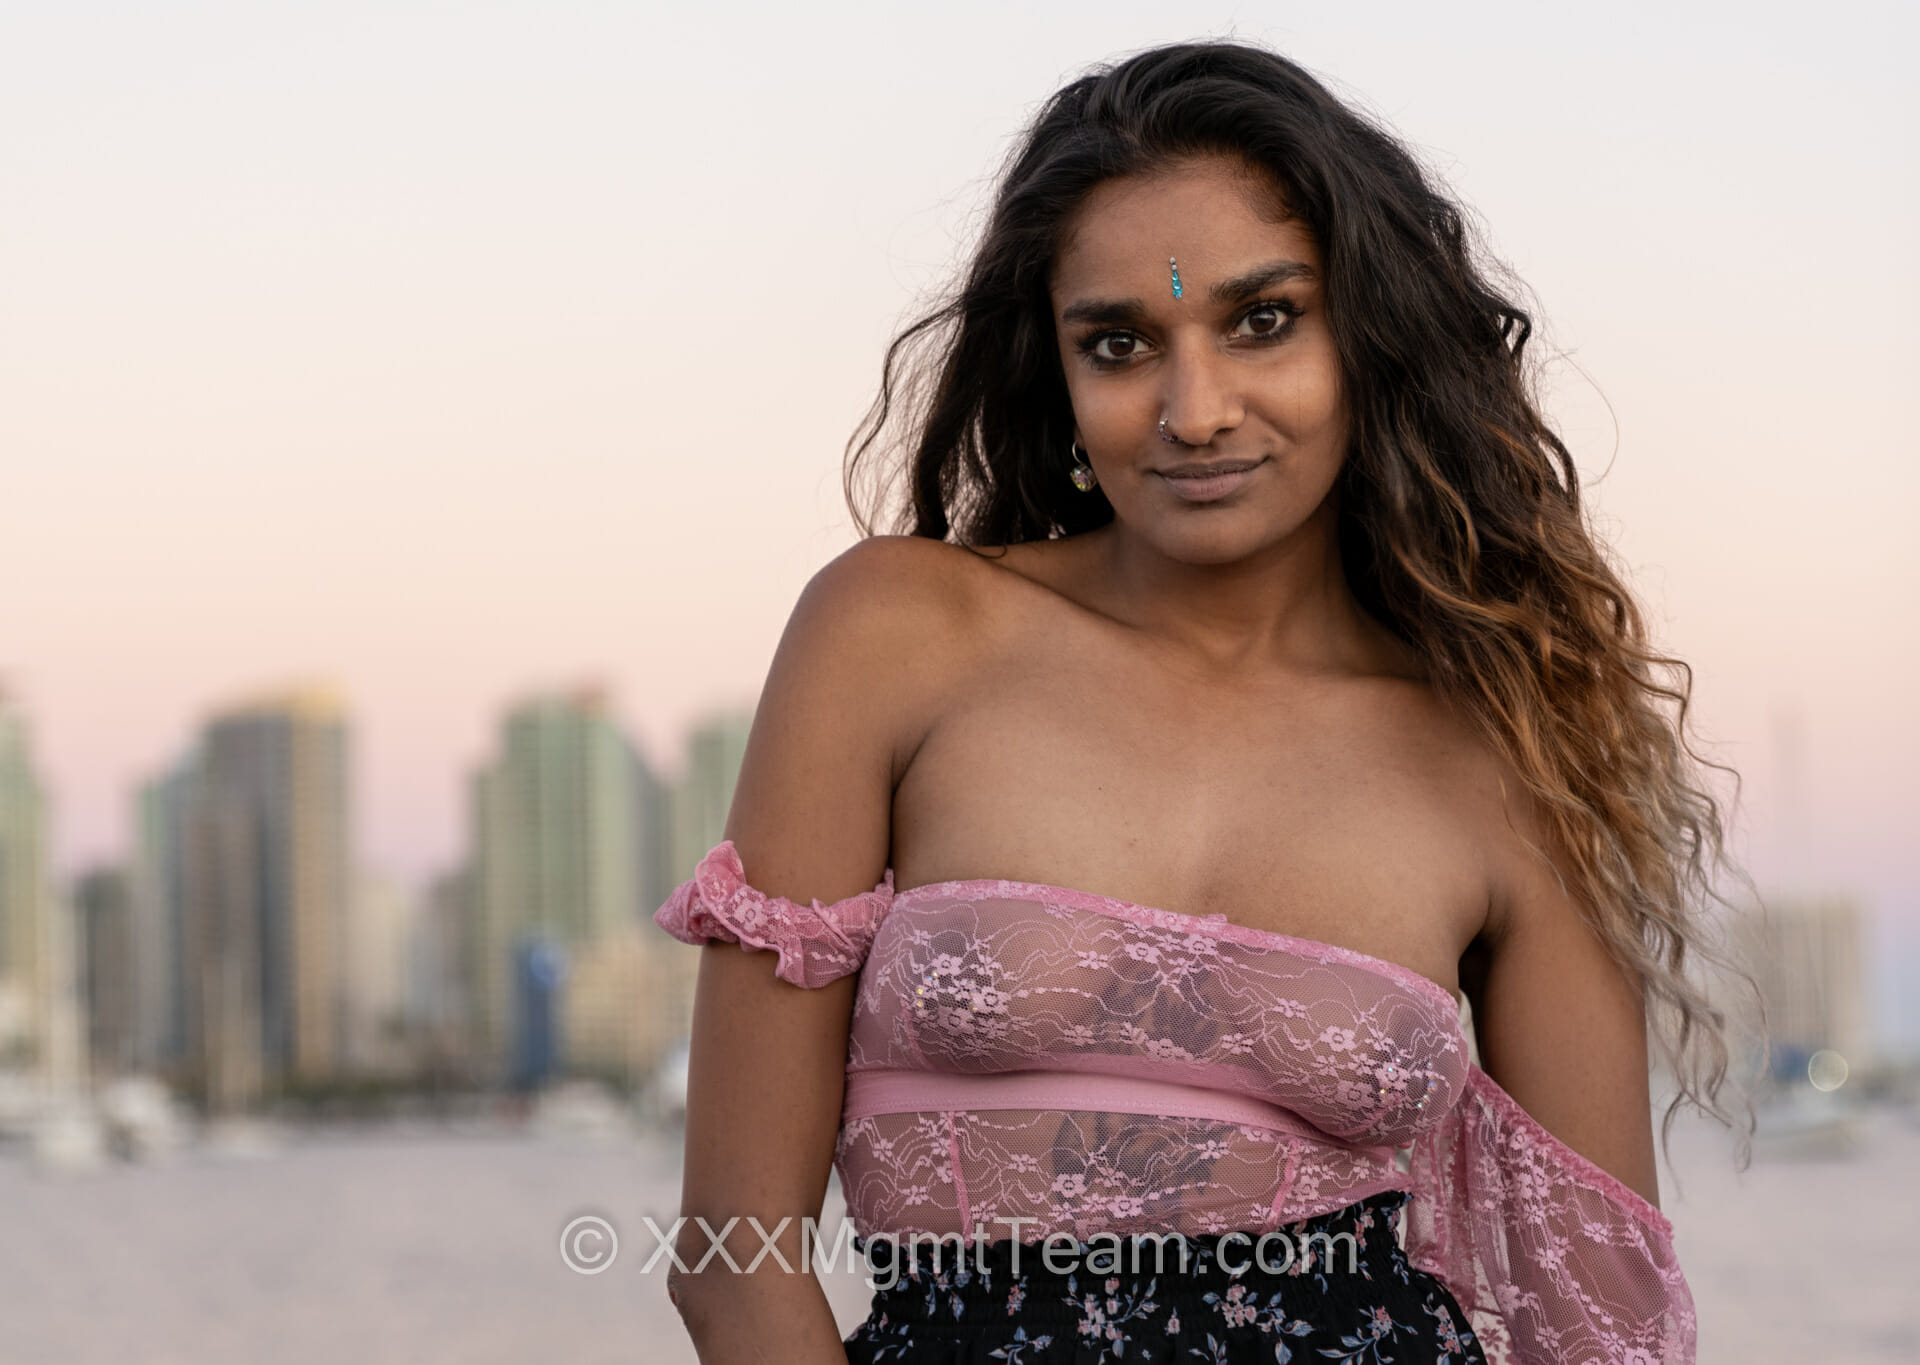 Poenstars - Siri Lanka â€“ Pornstar Profile Â» Become a Pornstar Â» Sri Lankan Model